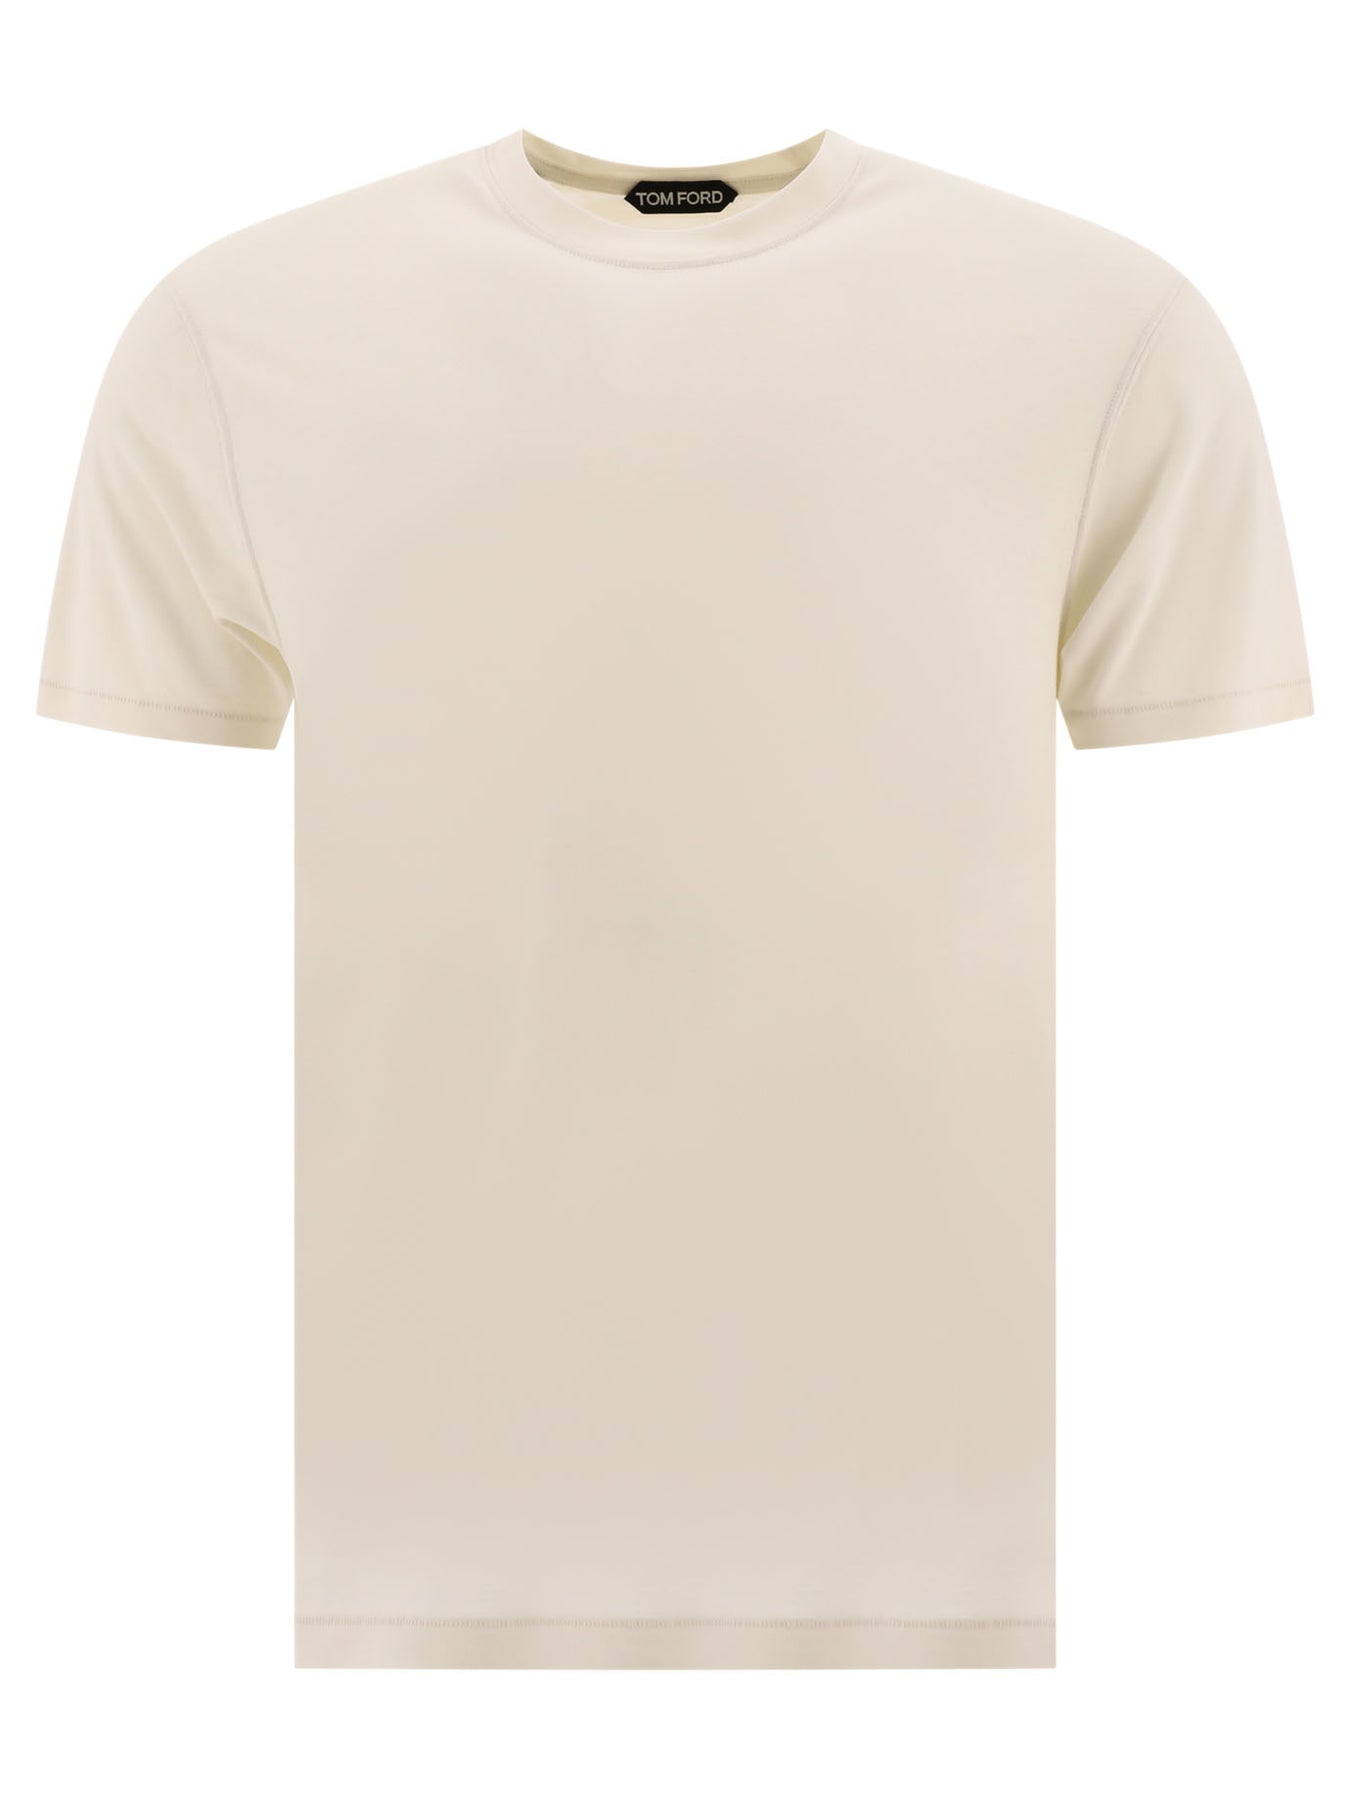 Tom Ford Slim-Fit Stretch-cotton Jersey T-Shirt - Men - Black Underwear - L